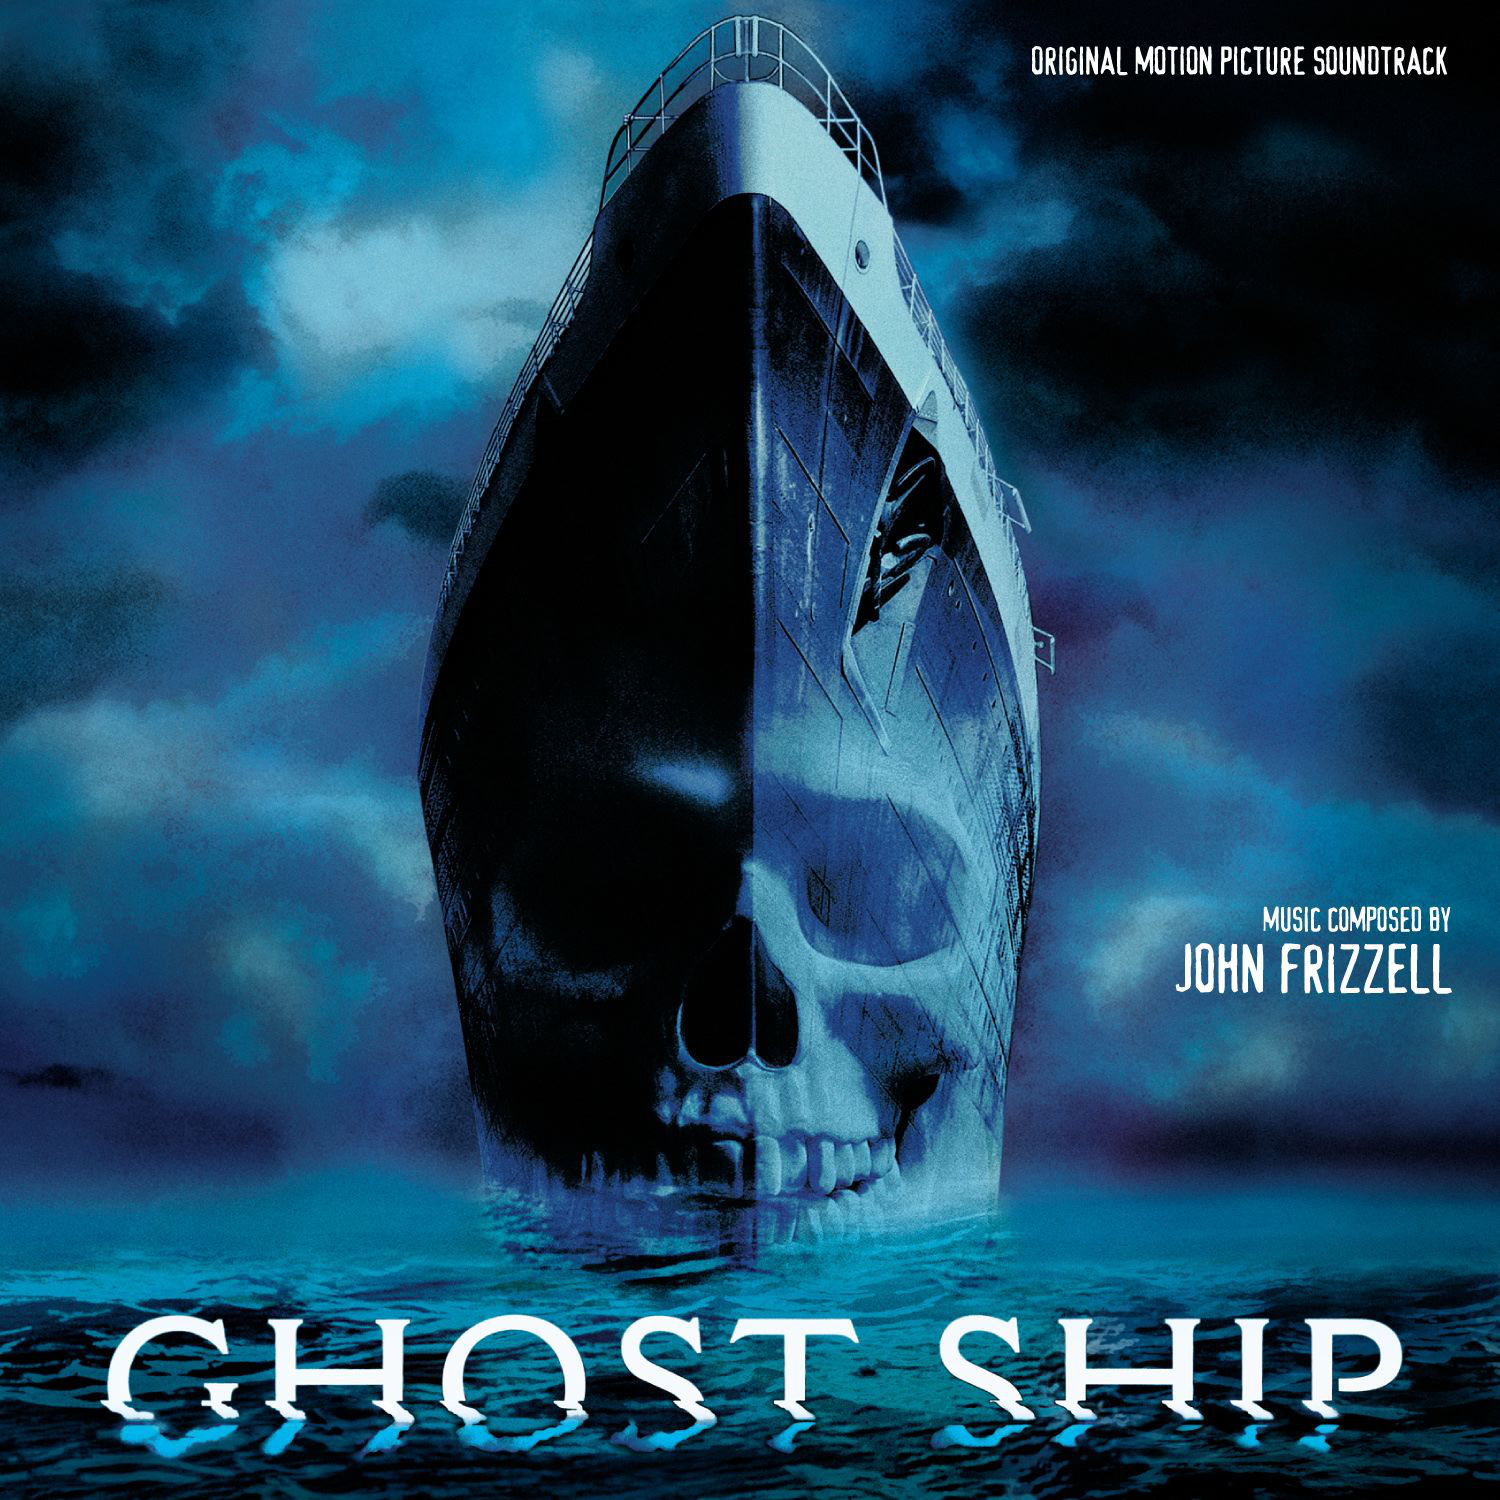 John Frizzel - My Little Box  ( из фильма корабль-призрак)